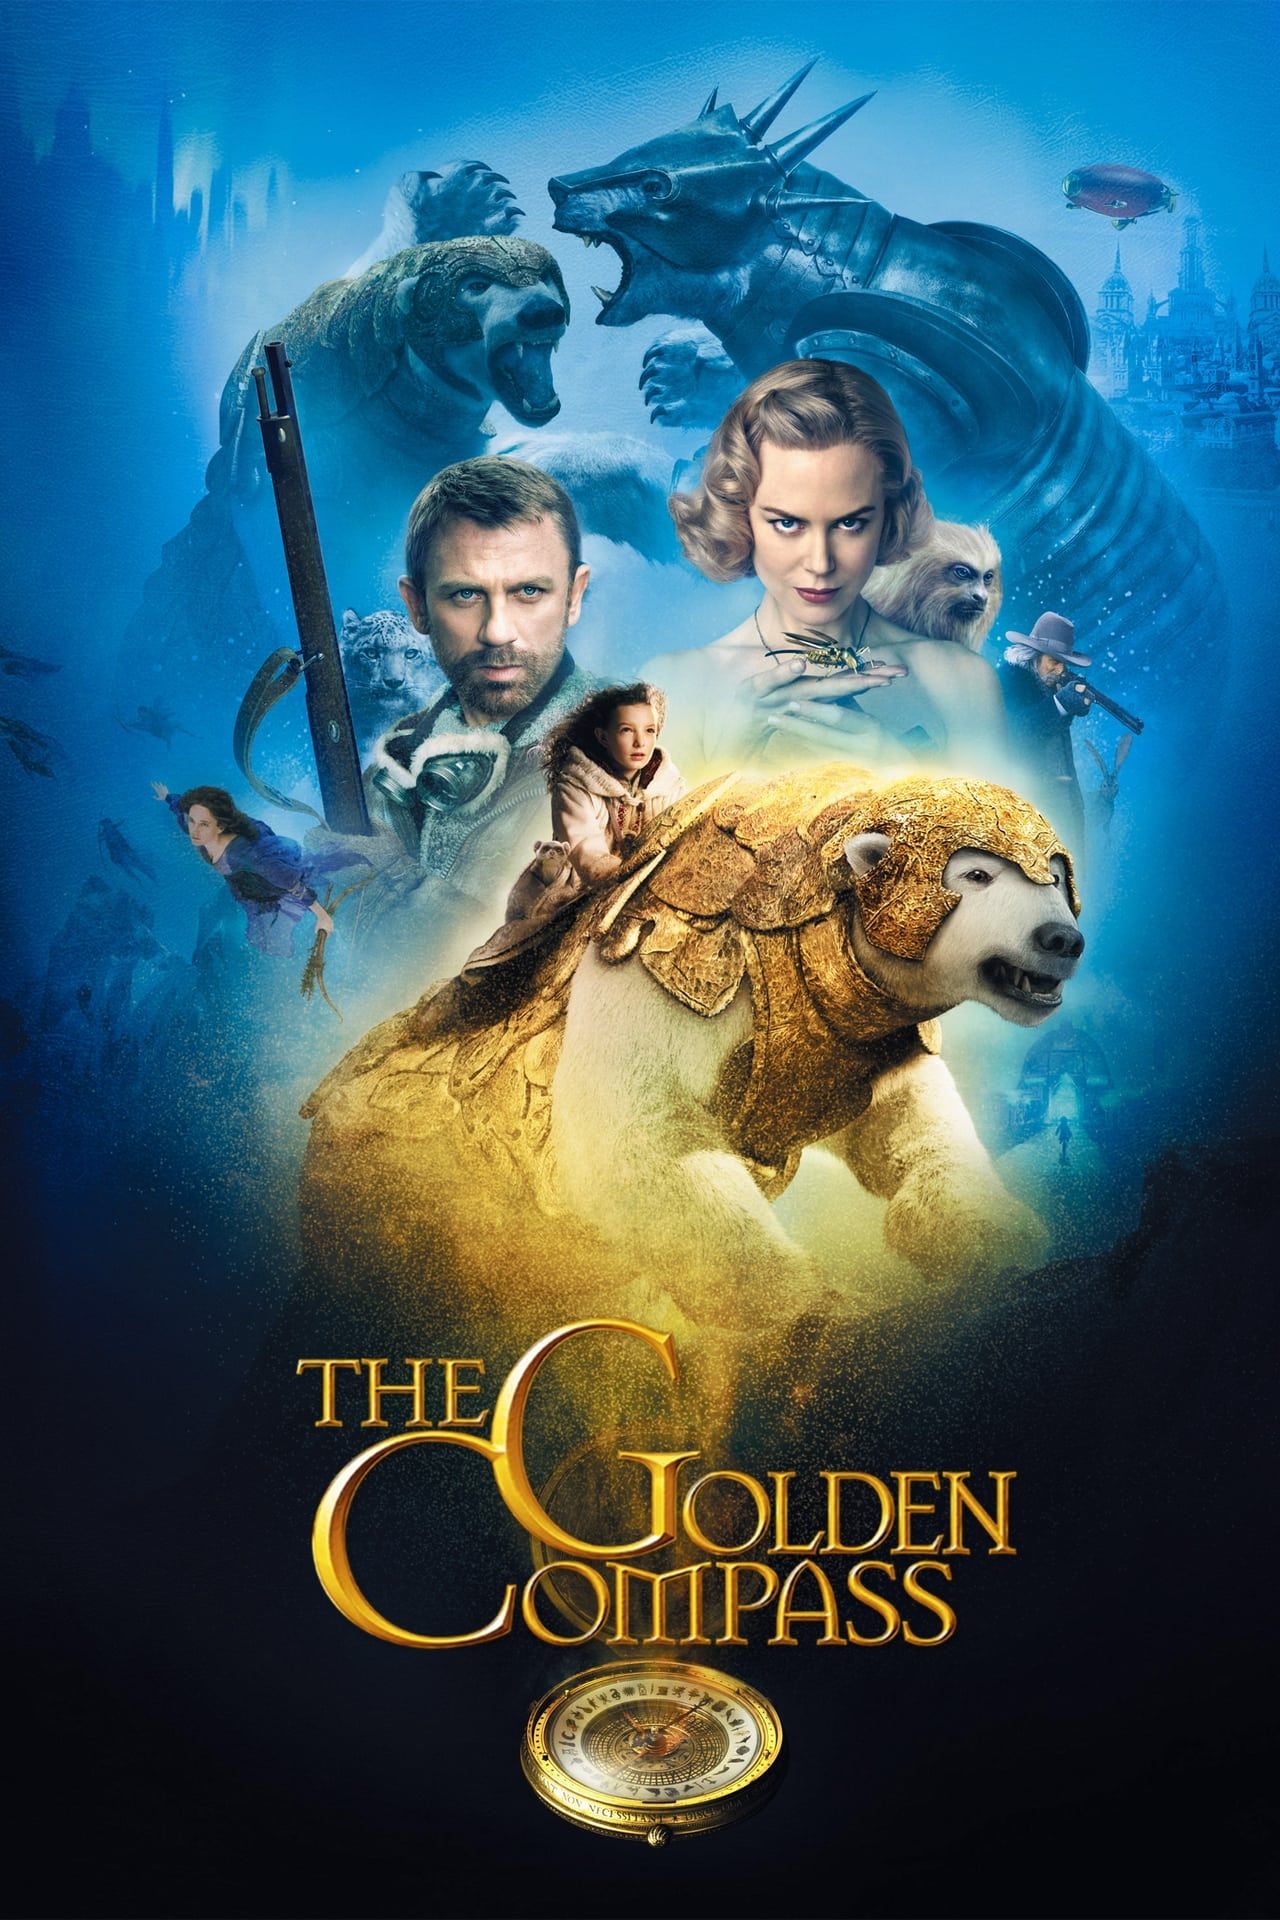 The Golden Compass Movie Poster With Daniel Craig, Nicole Kidman, and a Girl Riding a Polar Bear